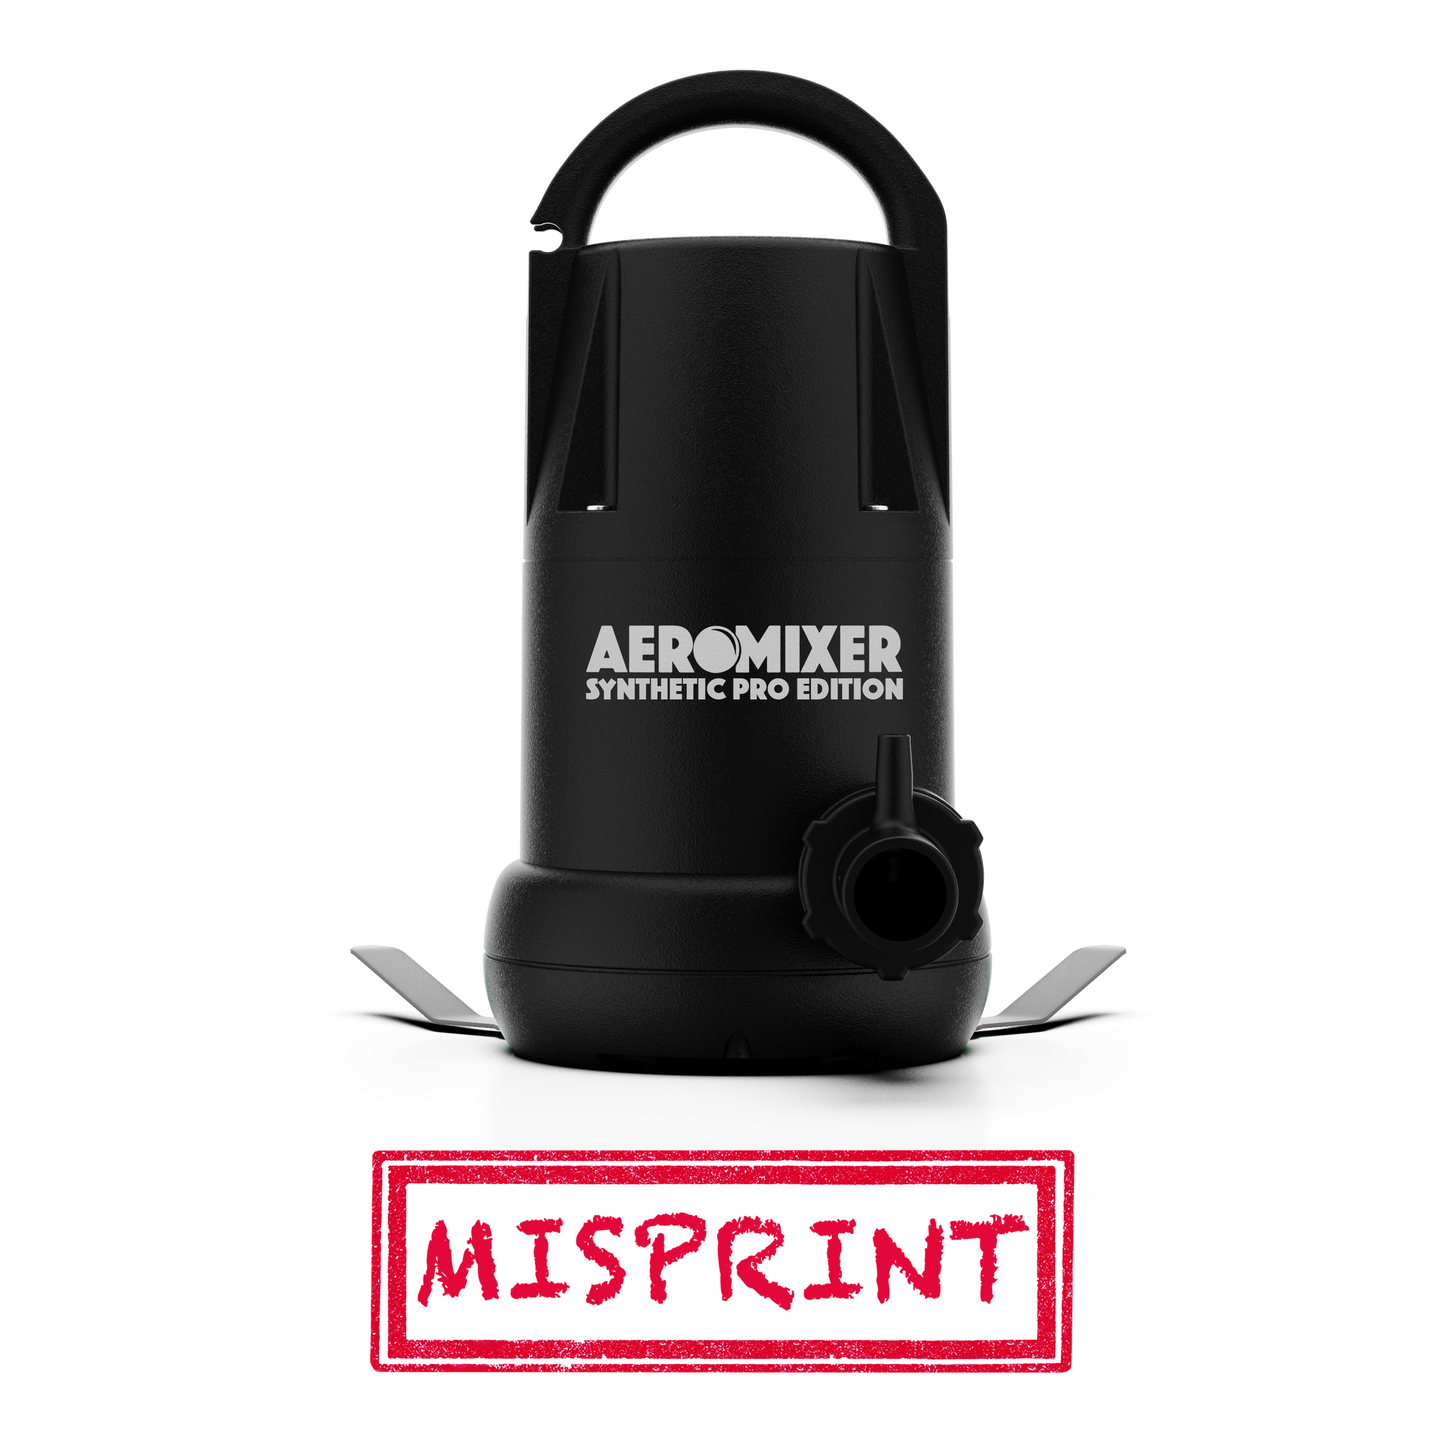 Misprinted Aeromixer 50% OFF